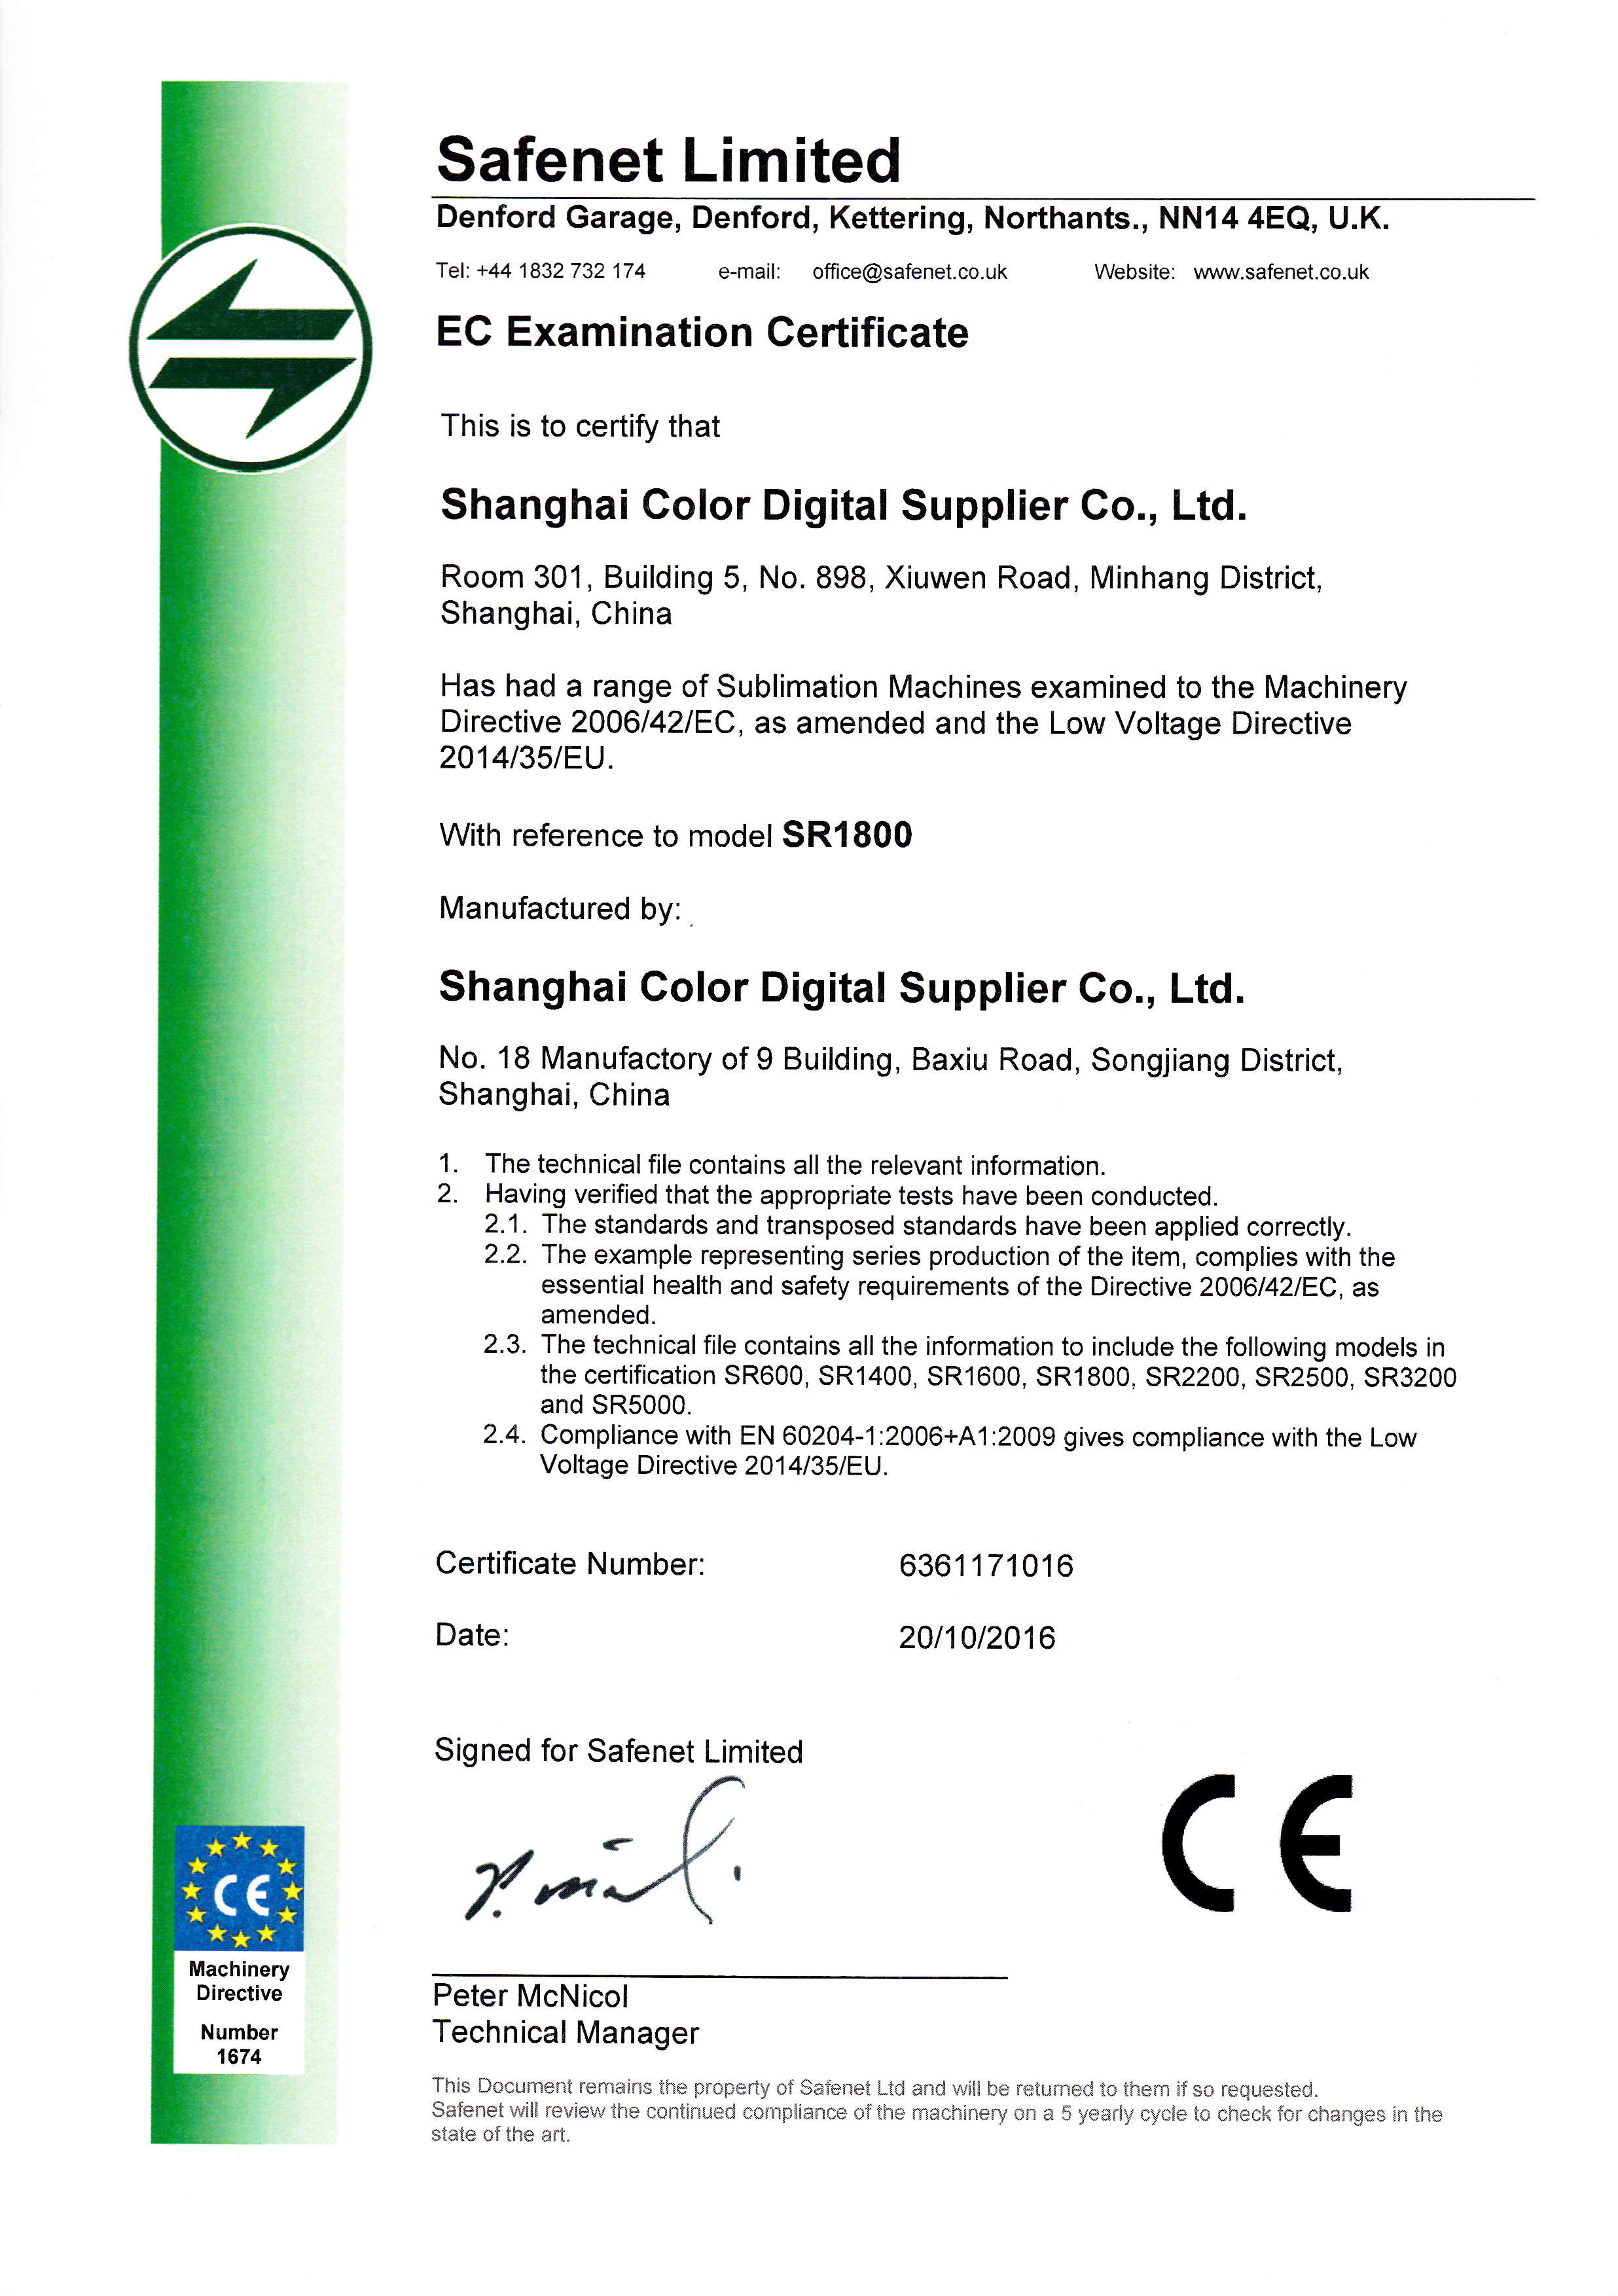 Shanghai Color Digital Supplier Co., Ltd. Certifications